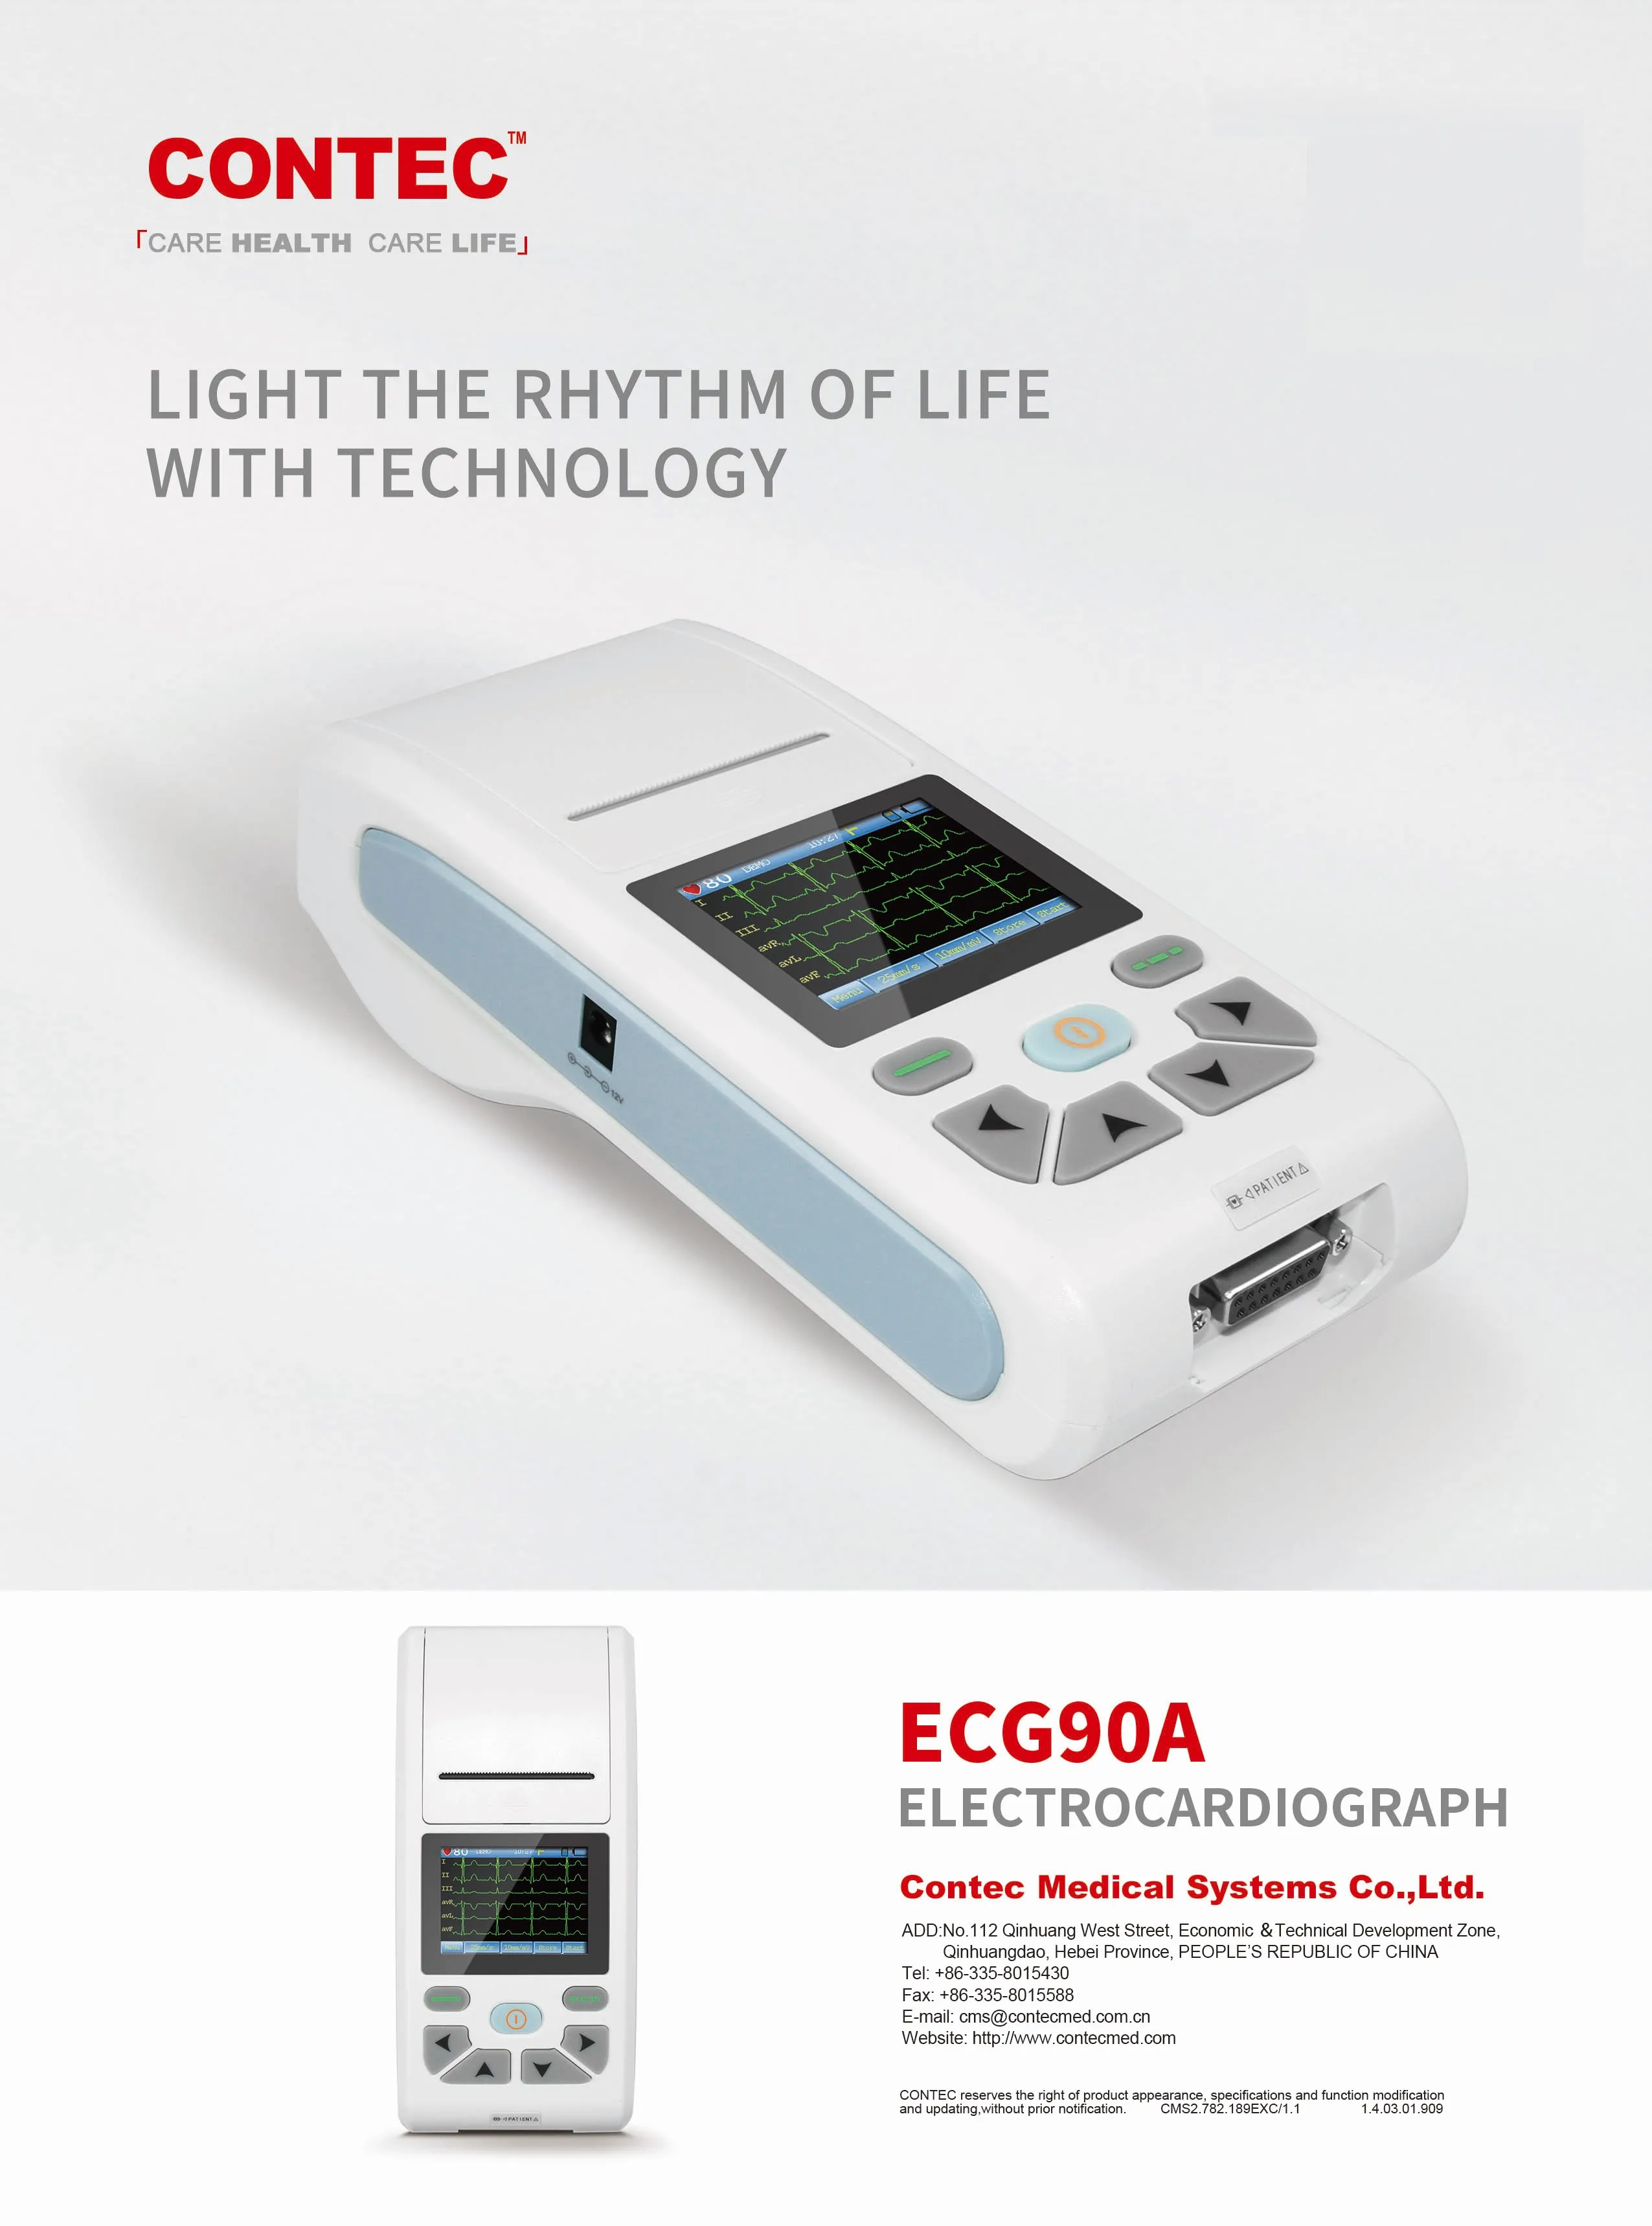 

CONTEC 12-Channel ECG/EKG 90A Machine Electrocardiograph, PC Software, Touch Screen ECG90A